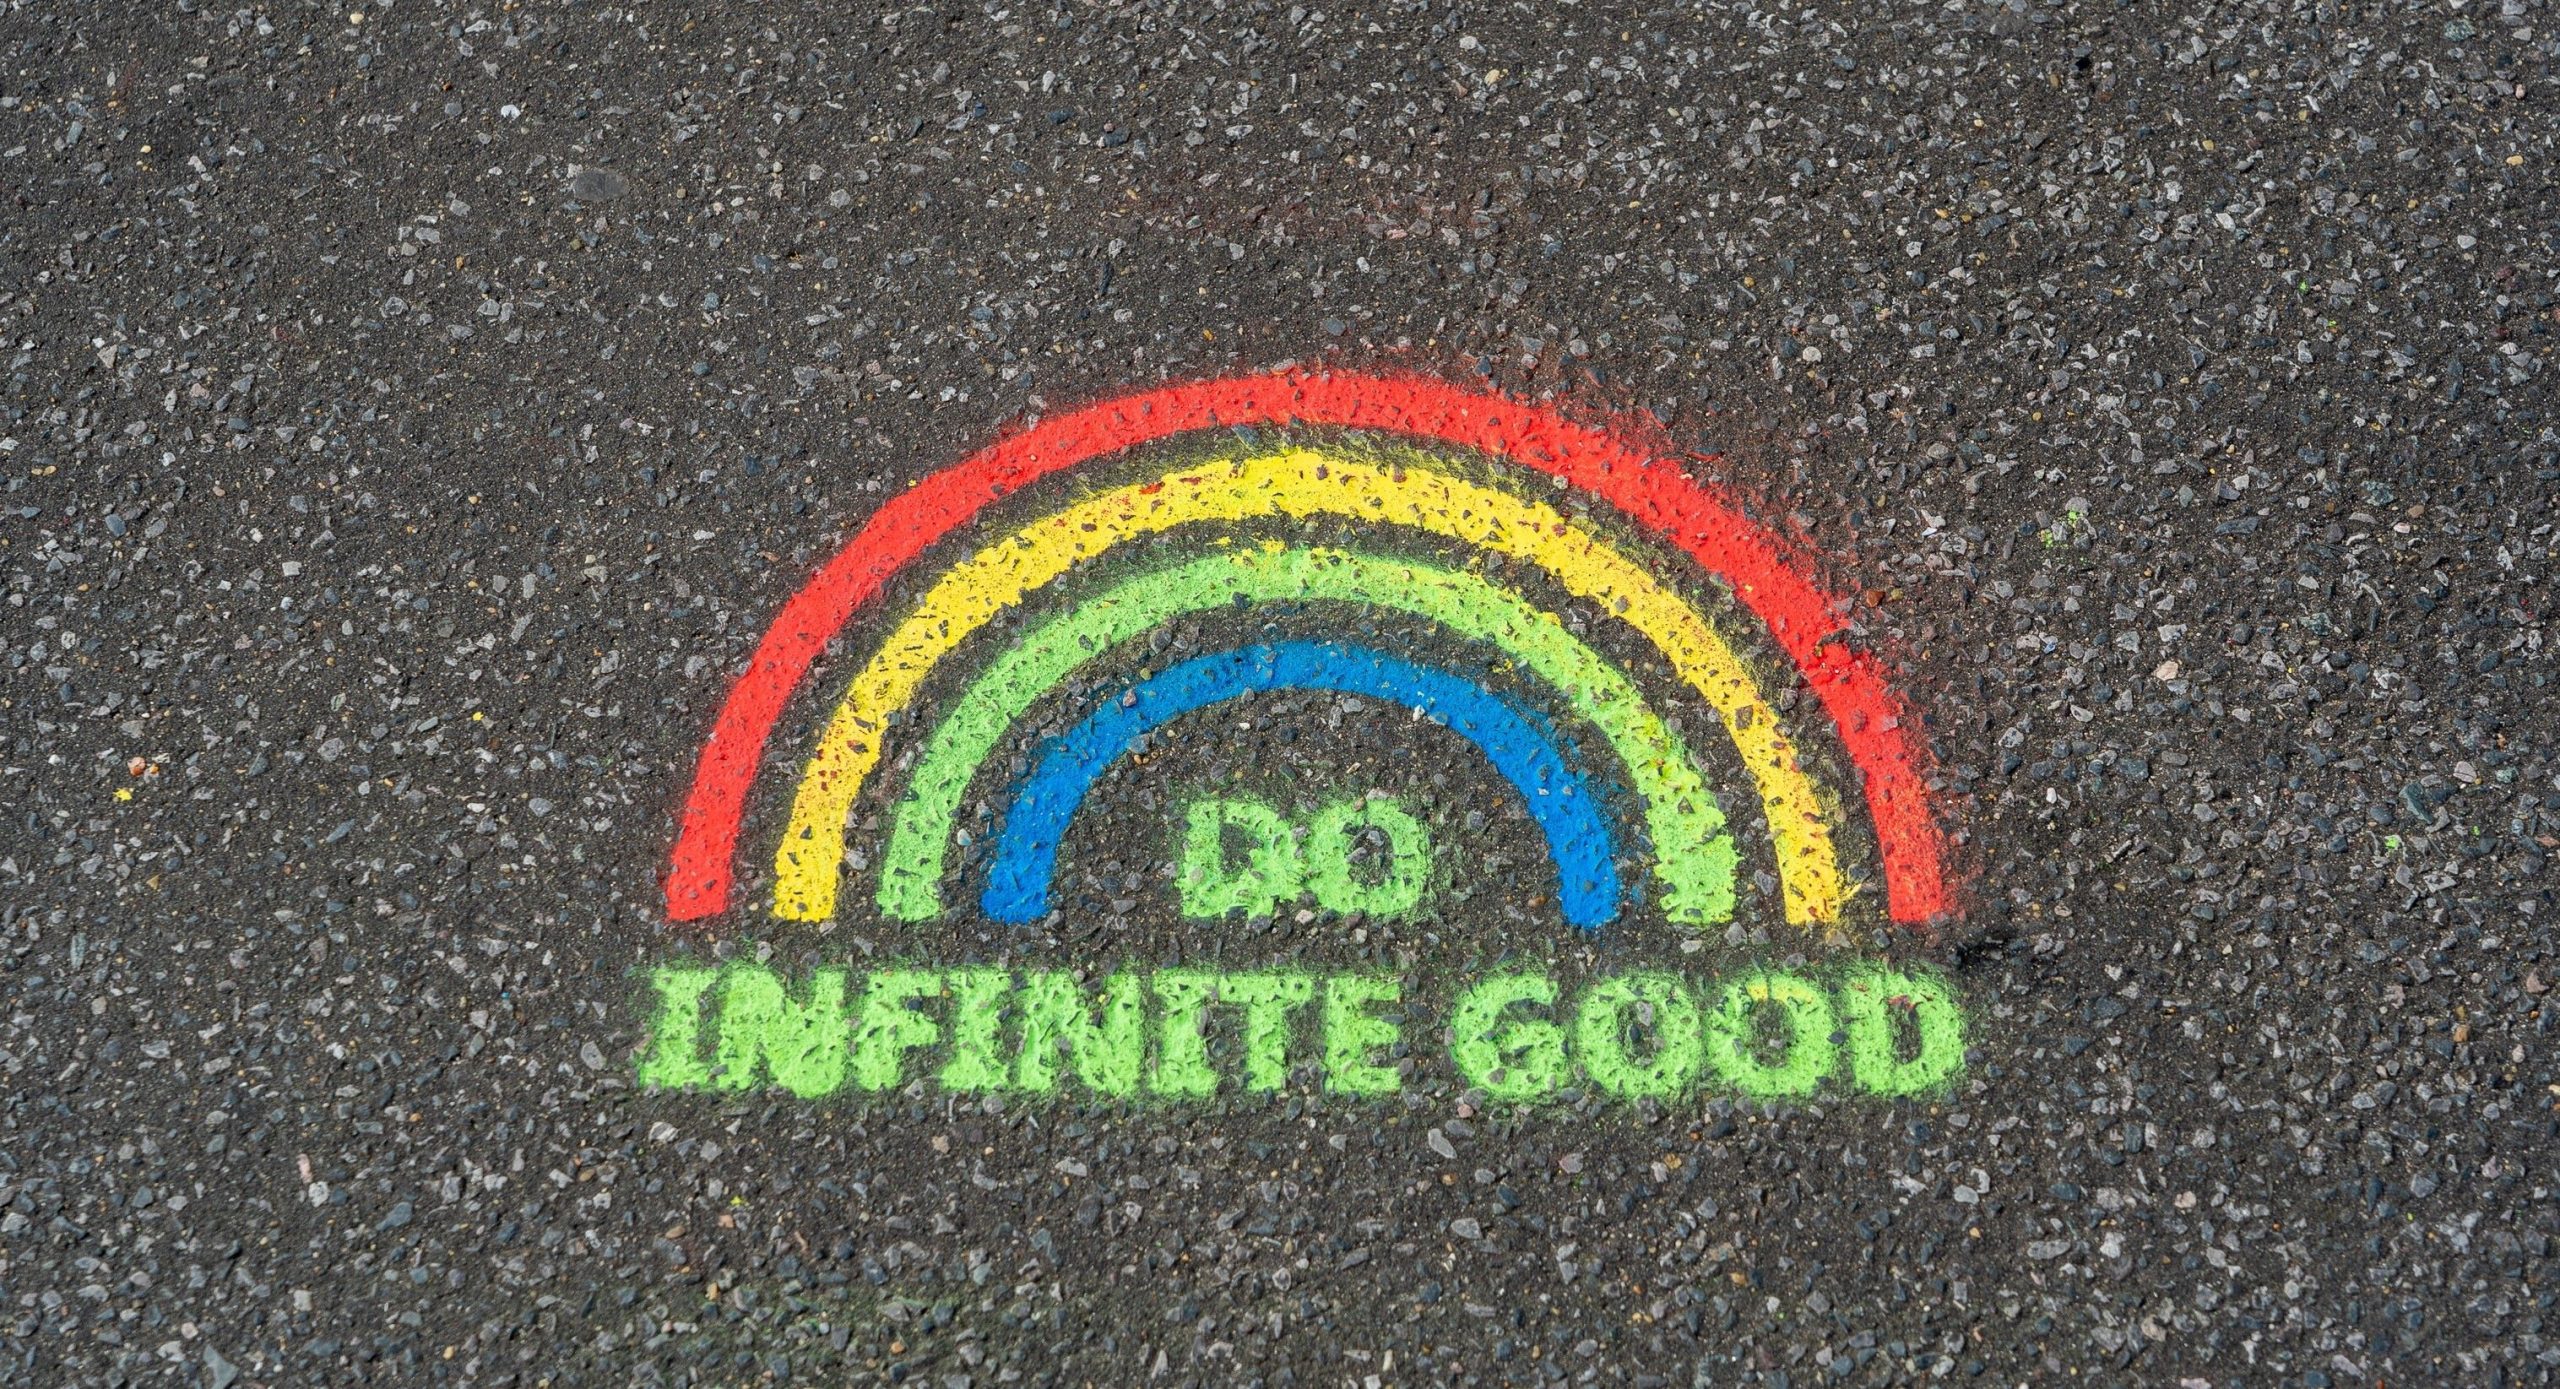 A rainbow drawn in chalk on an asphalt surface accompanied with the words 'Do infinite good'.